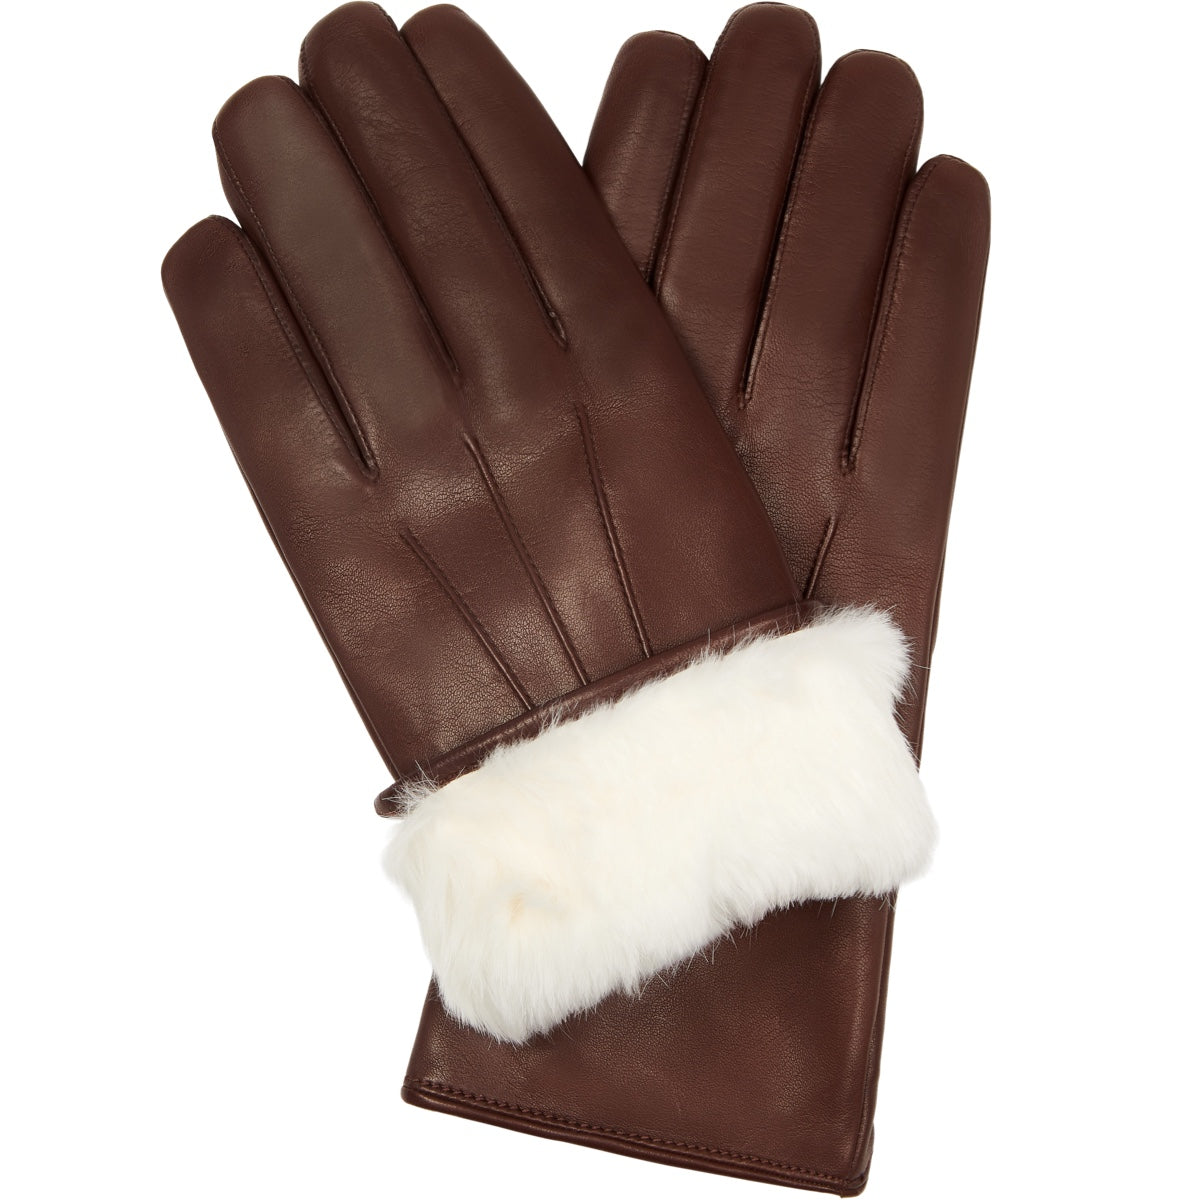 Aanpassen De vreemdeling hebzuchtig Men's Leather Gloves Brown - White Rabbit Fur - Handmade in Italy – Leather  Gloves Online